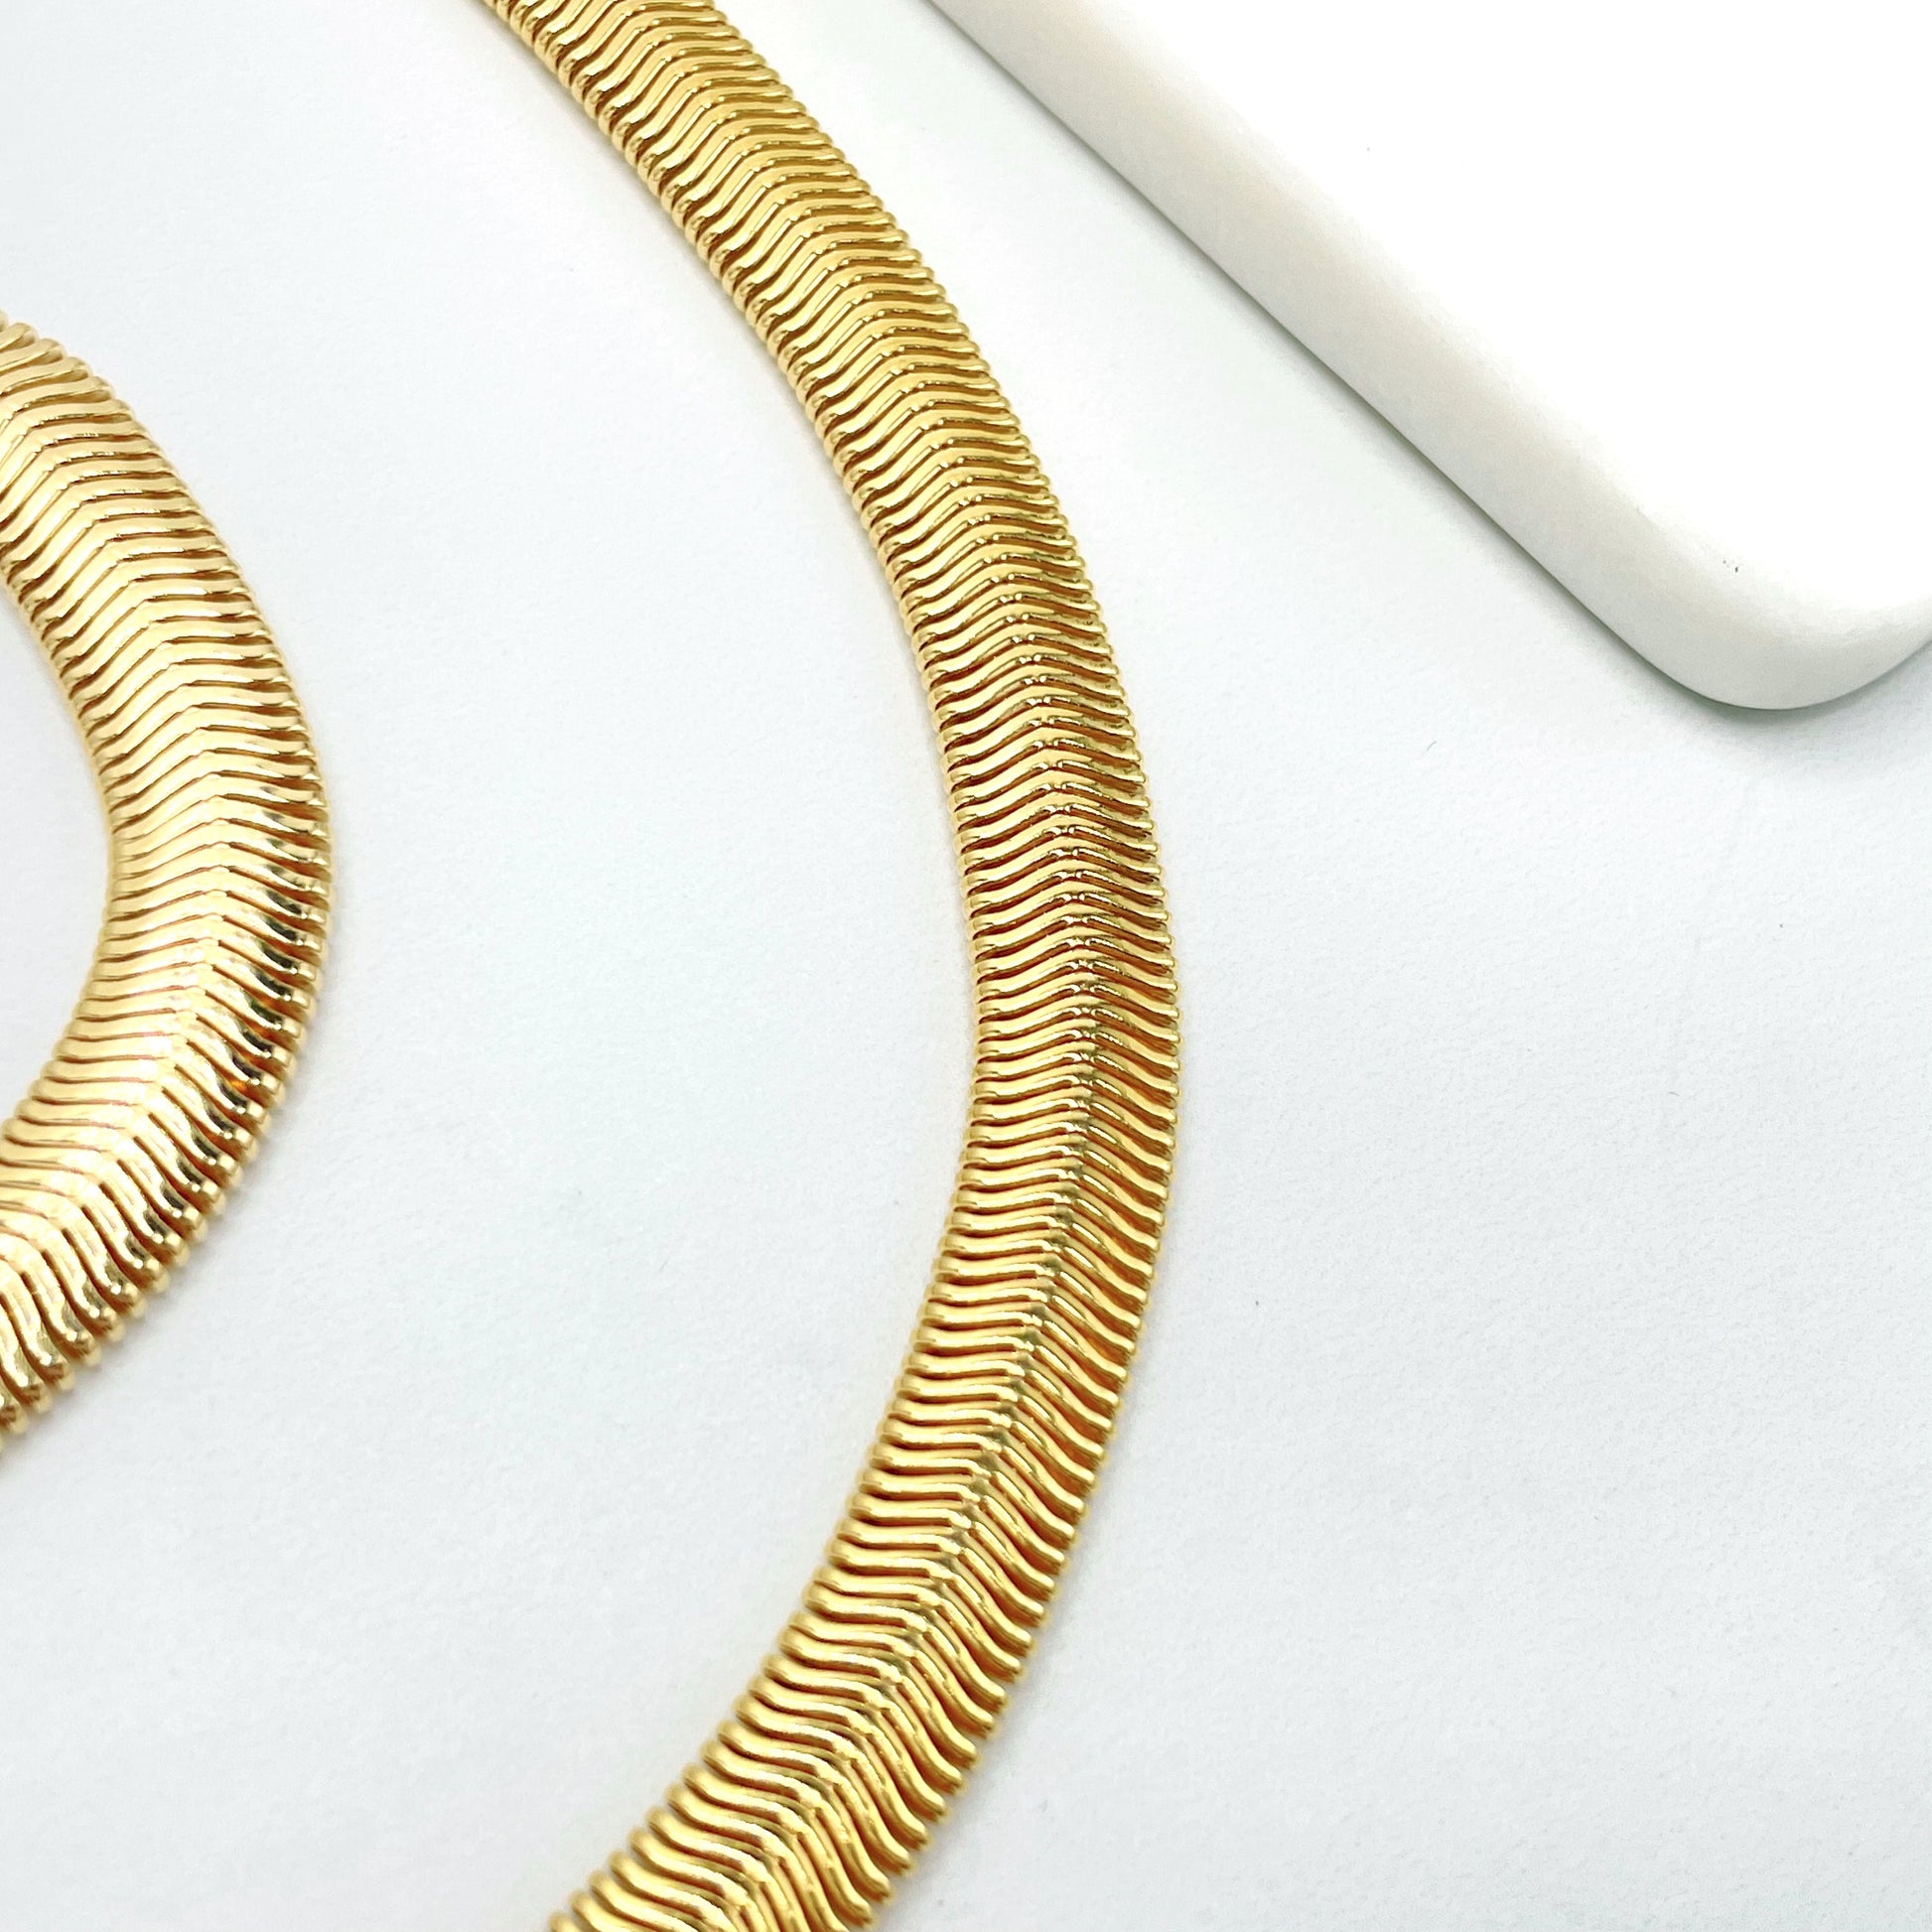 18k Gold Filled Fancy 10mm Snake Herringbone Chain Link Bracelet 7.5'', 8'' or 8.5''  Long, Wholesale Jewelry Making Supplies